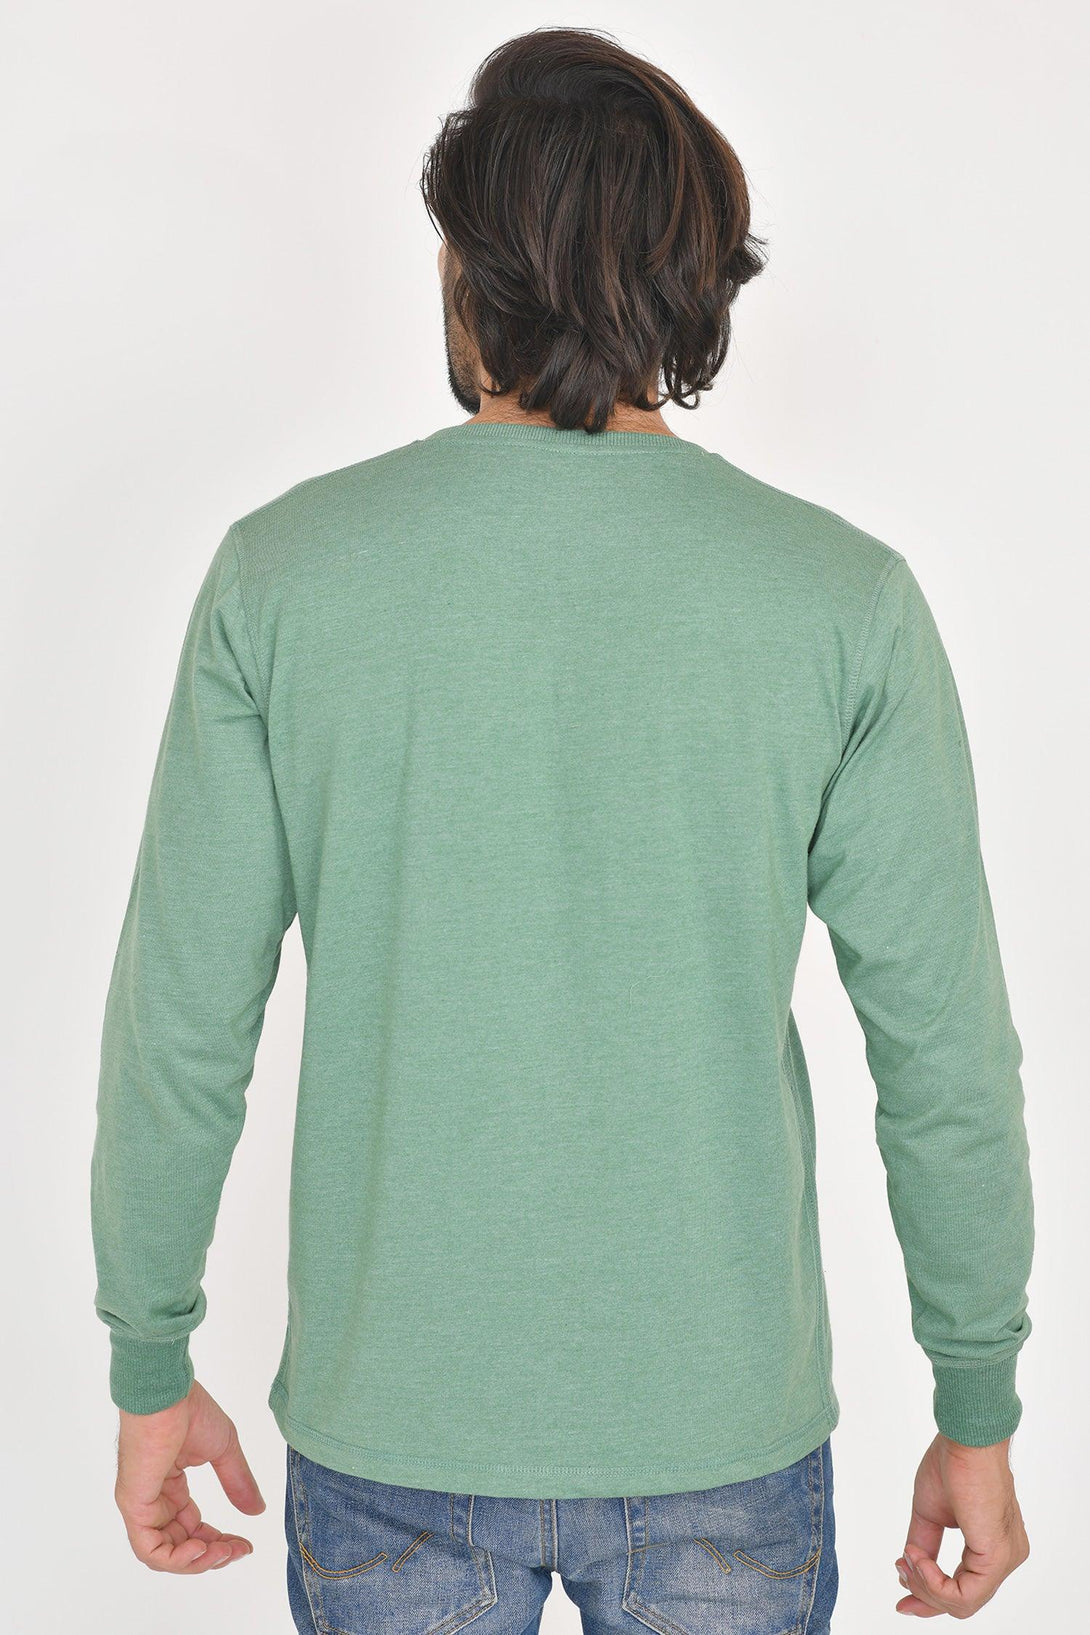 HENLEY Full Sleeve Shirts | HUNTER GREEN & SLATE Pack of 2 - FTS